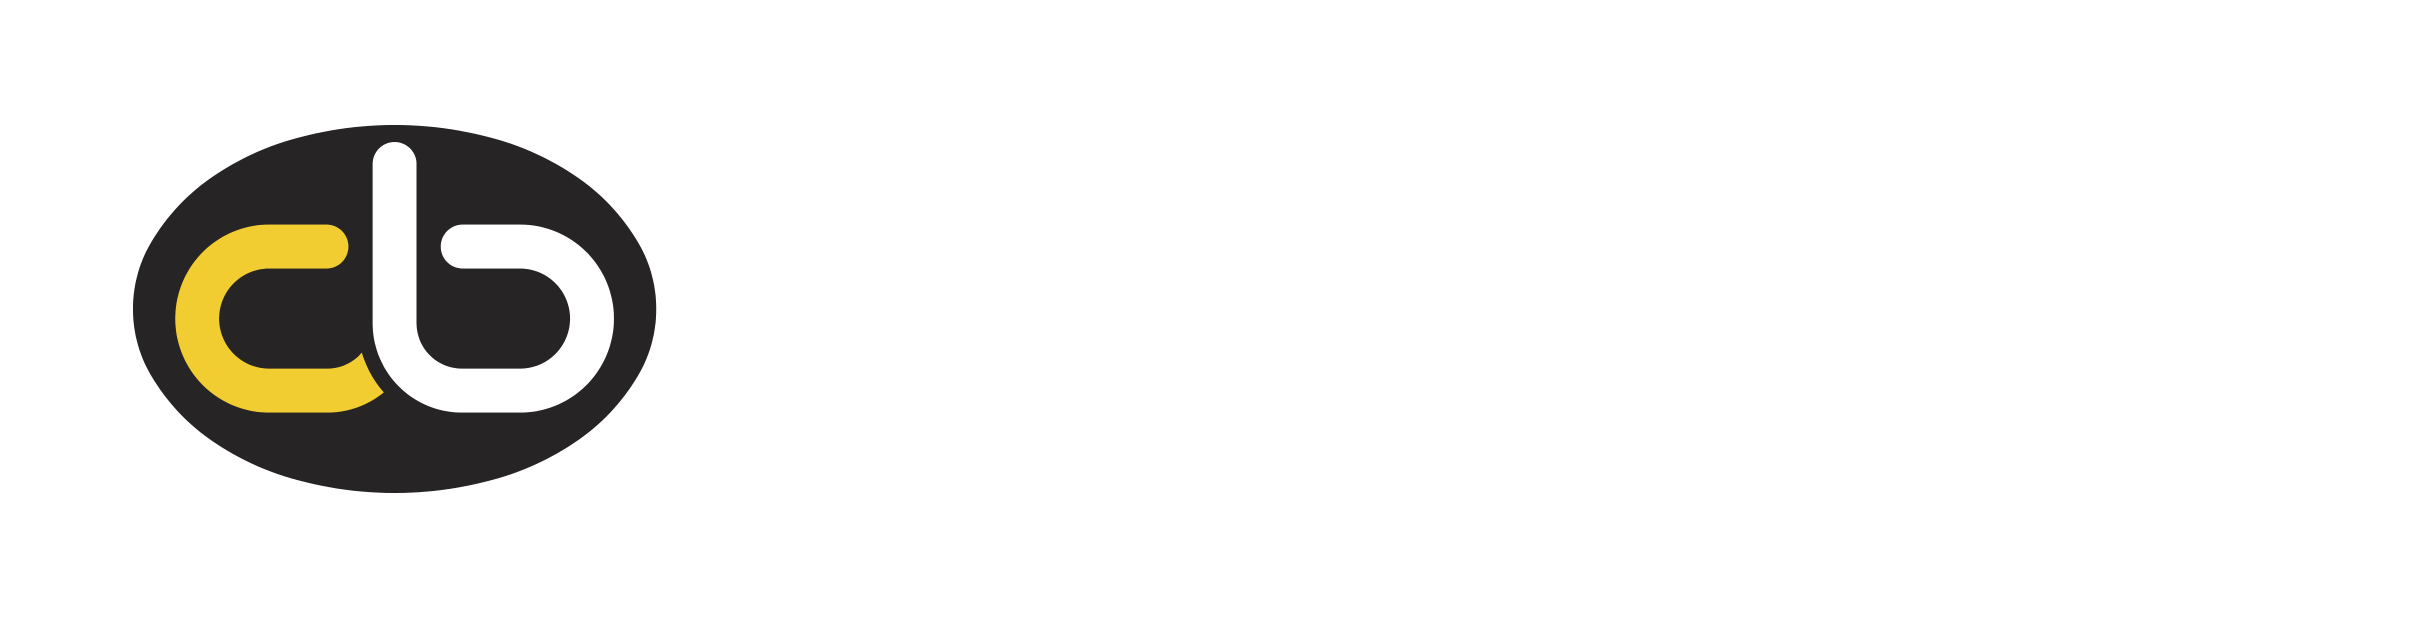 Logo Constructora Borinquen